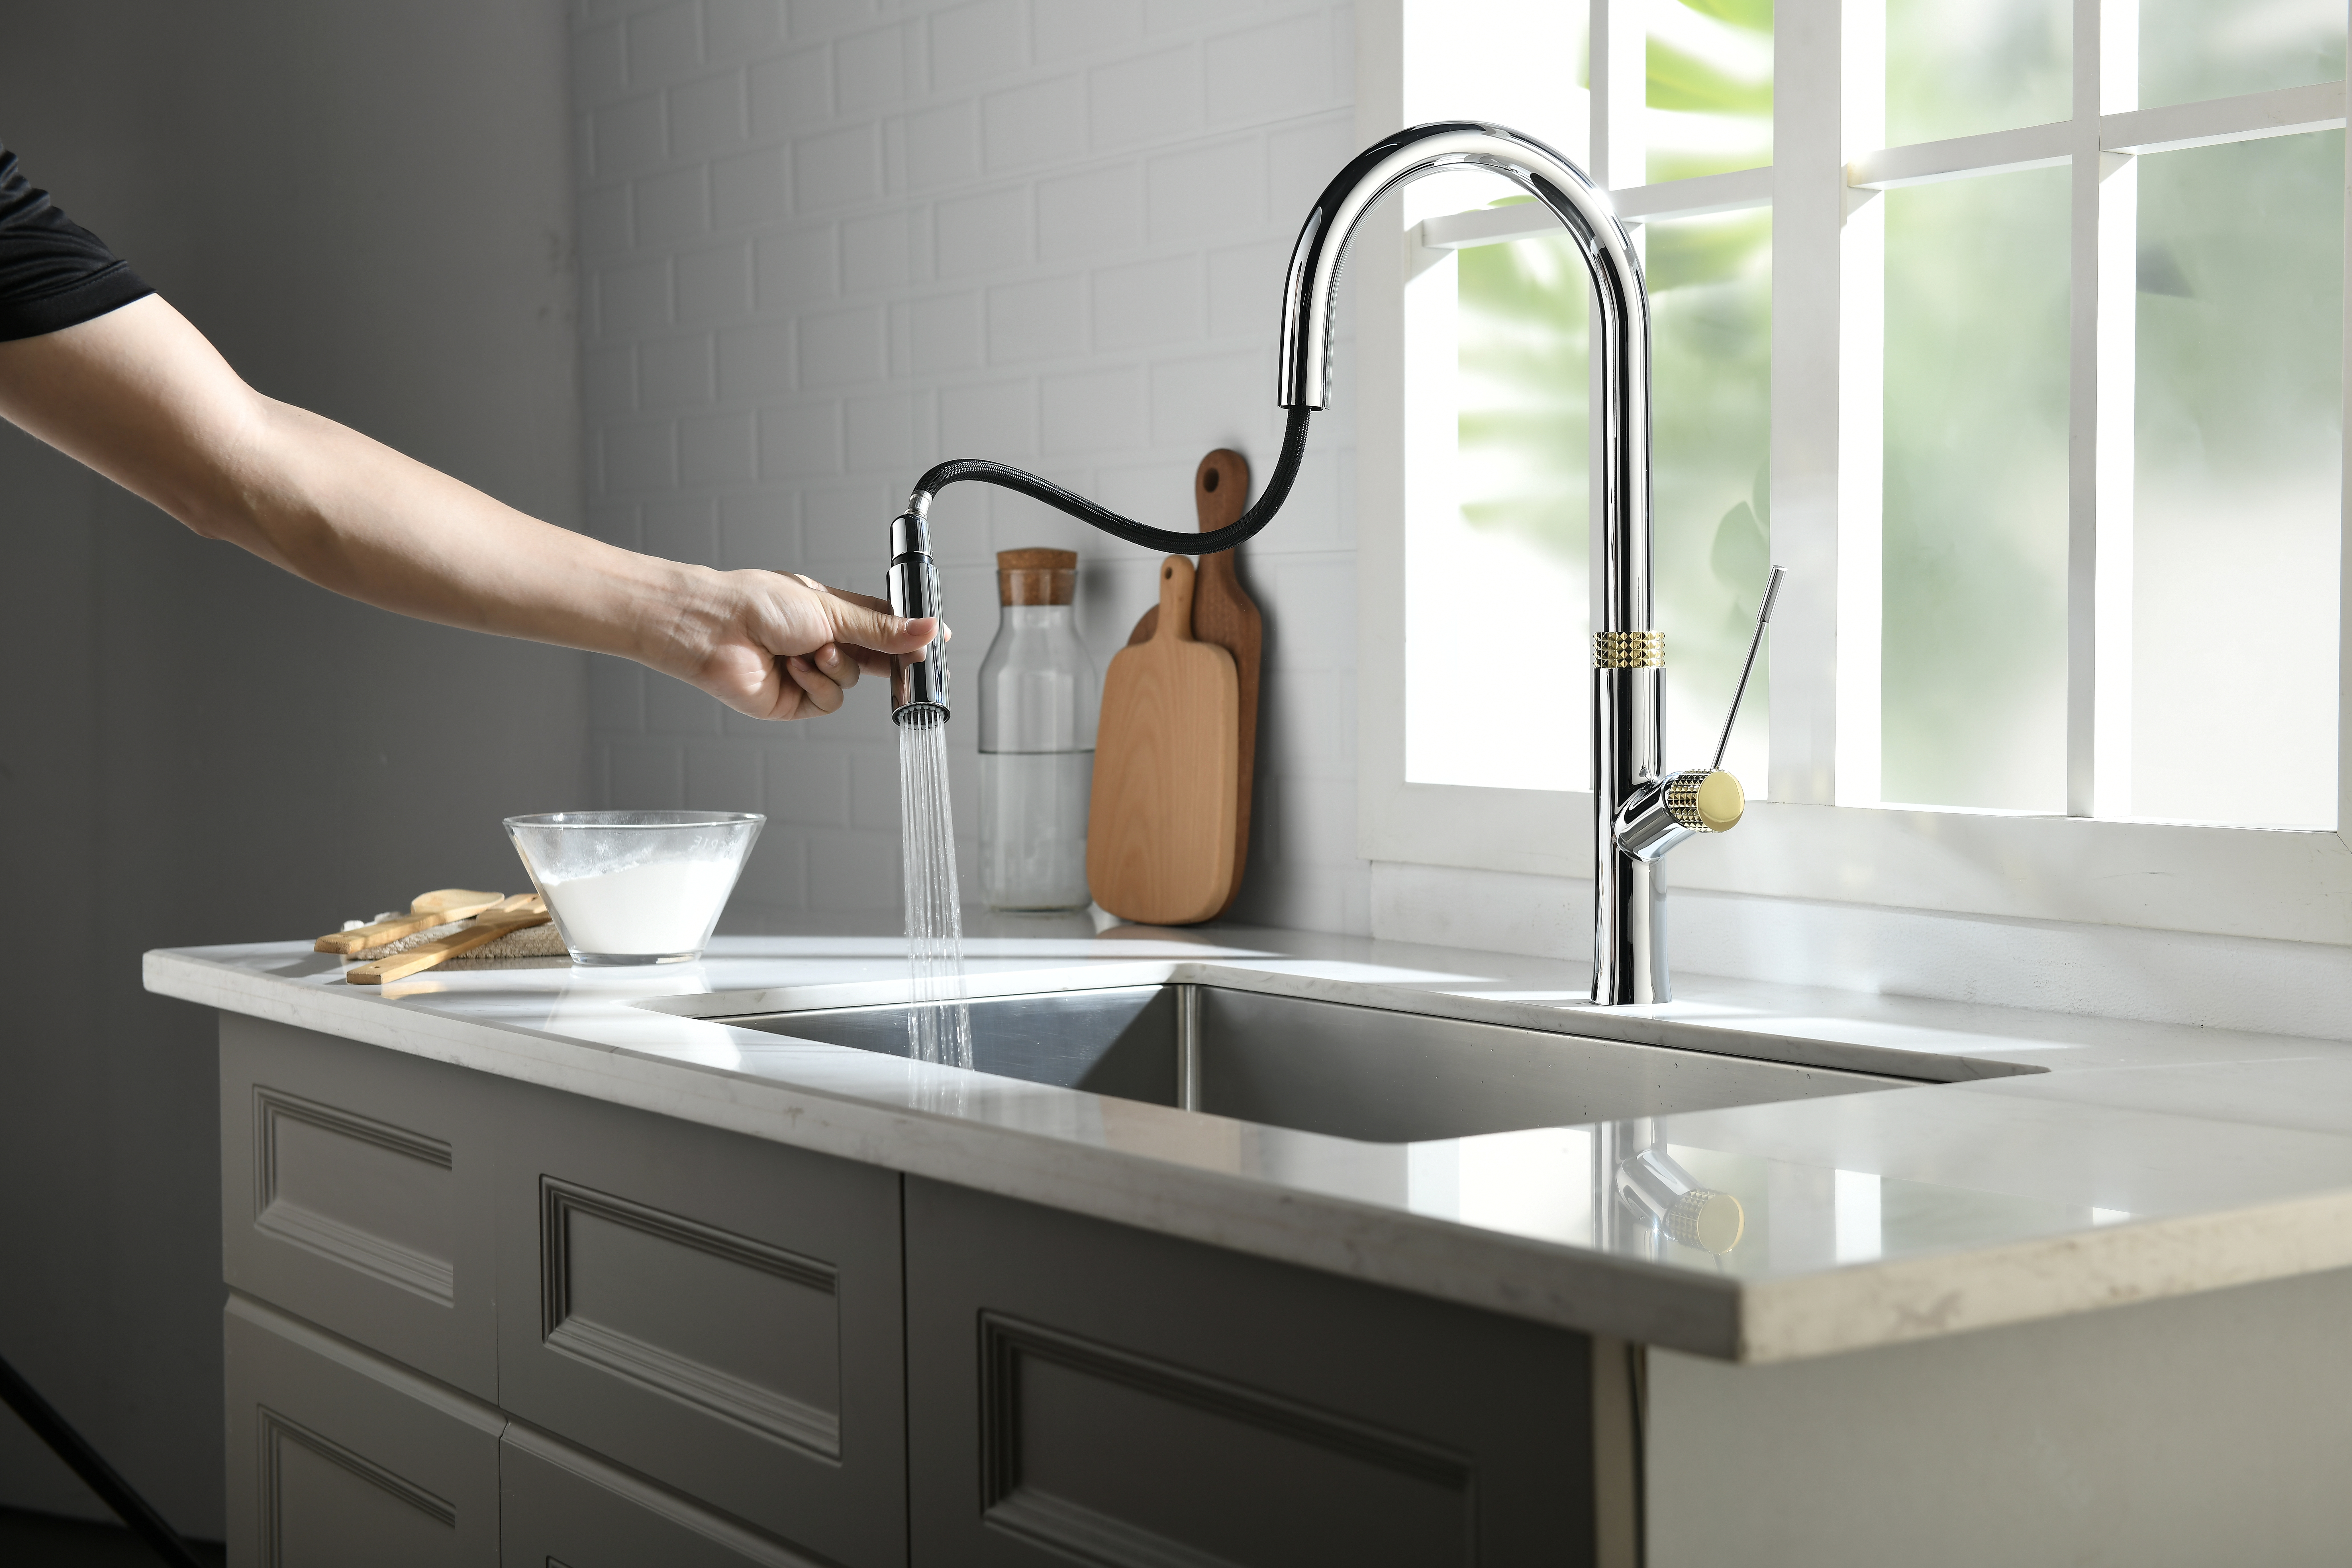 Modern Brass Chrome Pull Out Kitchen Mixer Faucet